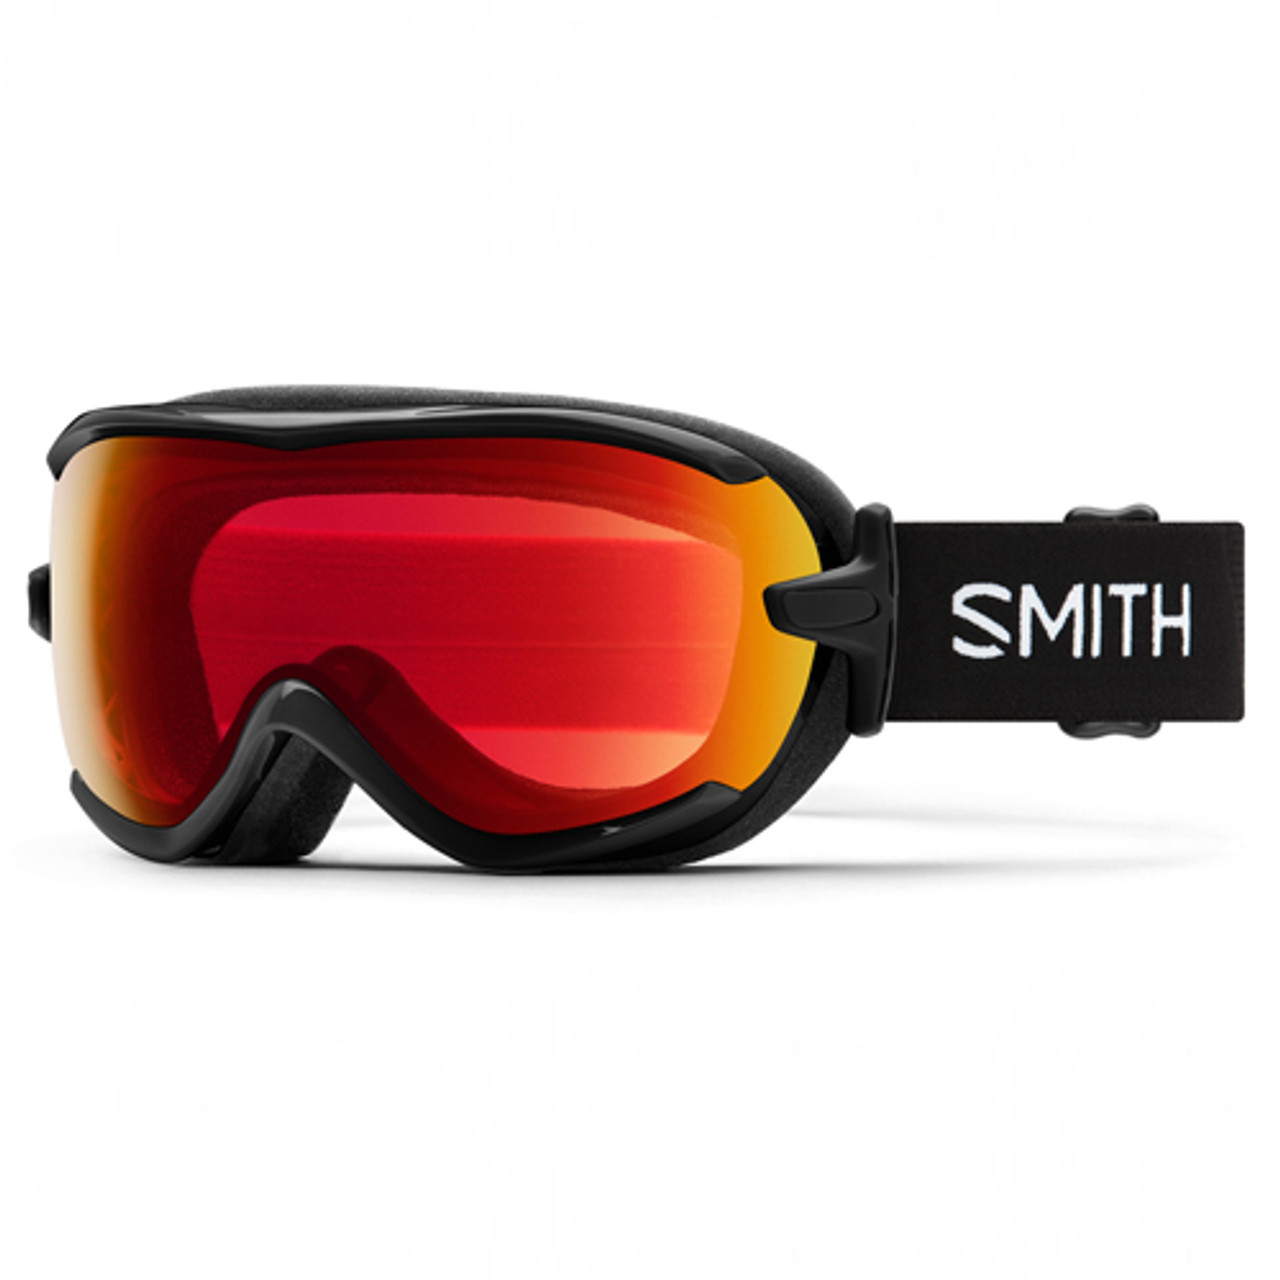 smith snow goggles lenses